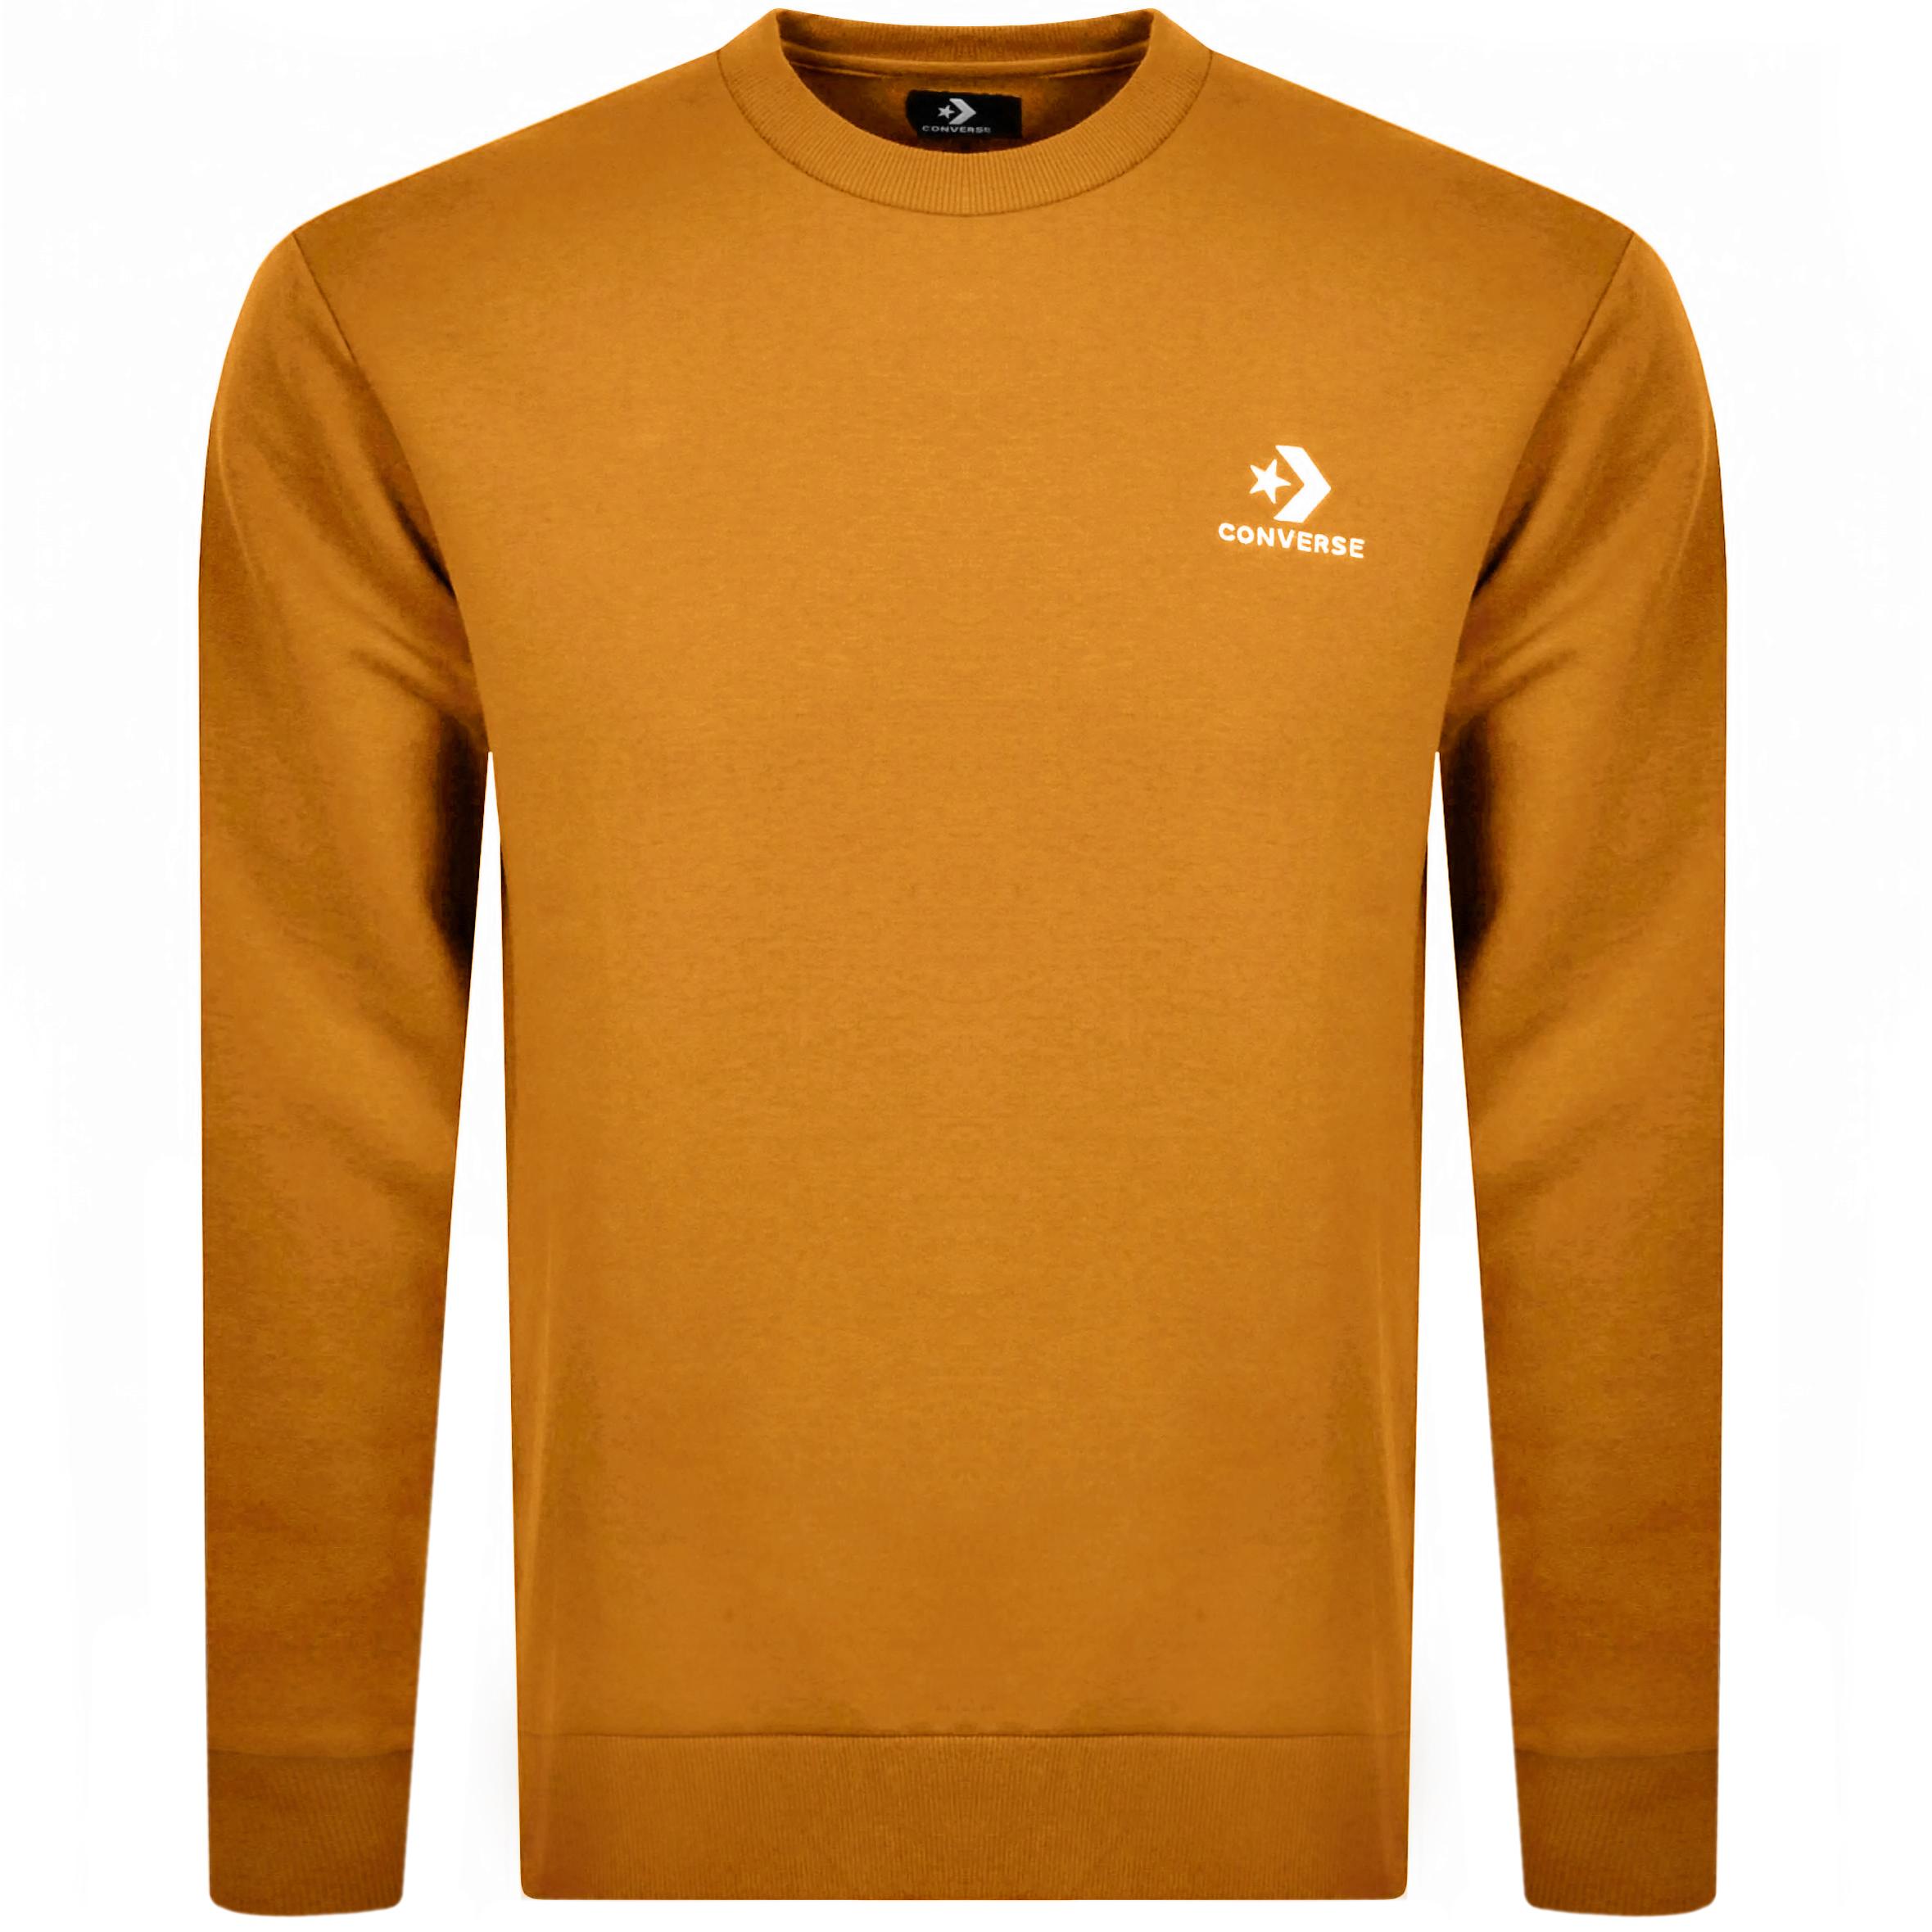 Converse Fleece Star Chevron Logo Sweatshirt in Orange for Men - Lyst